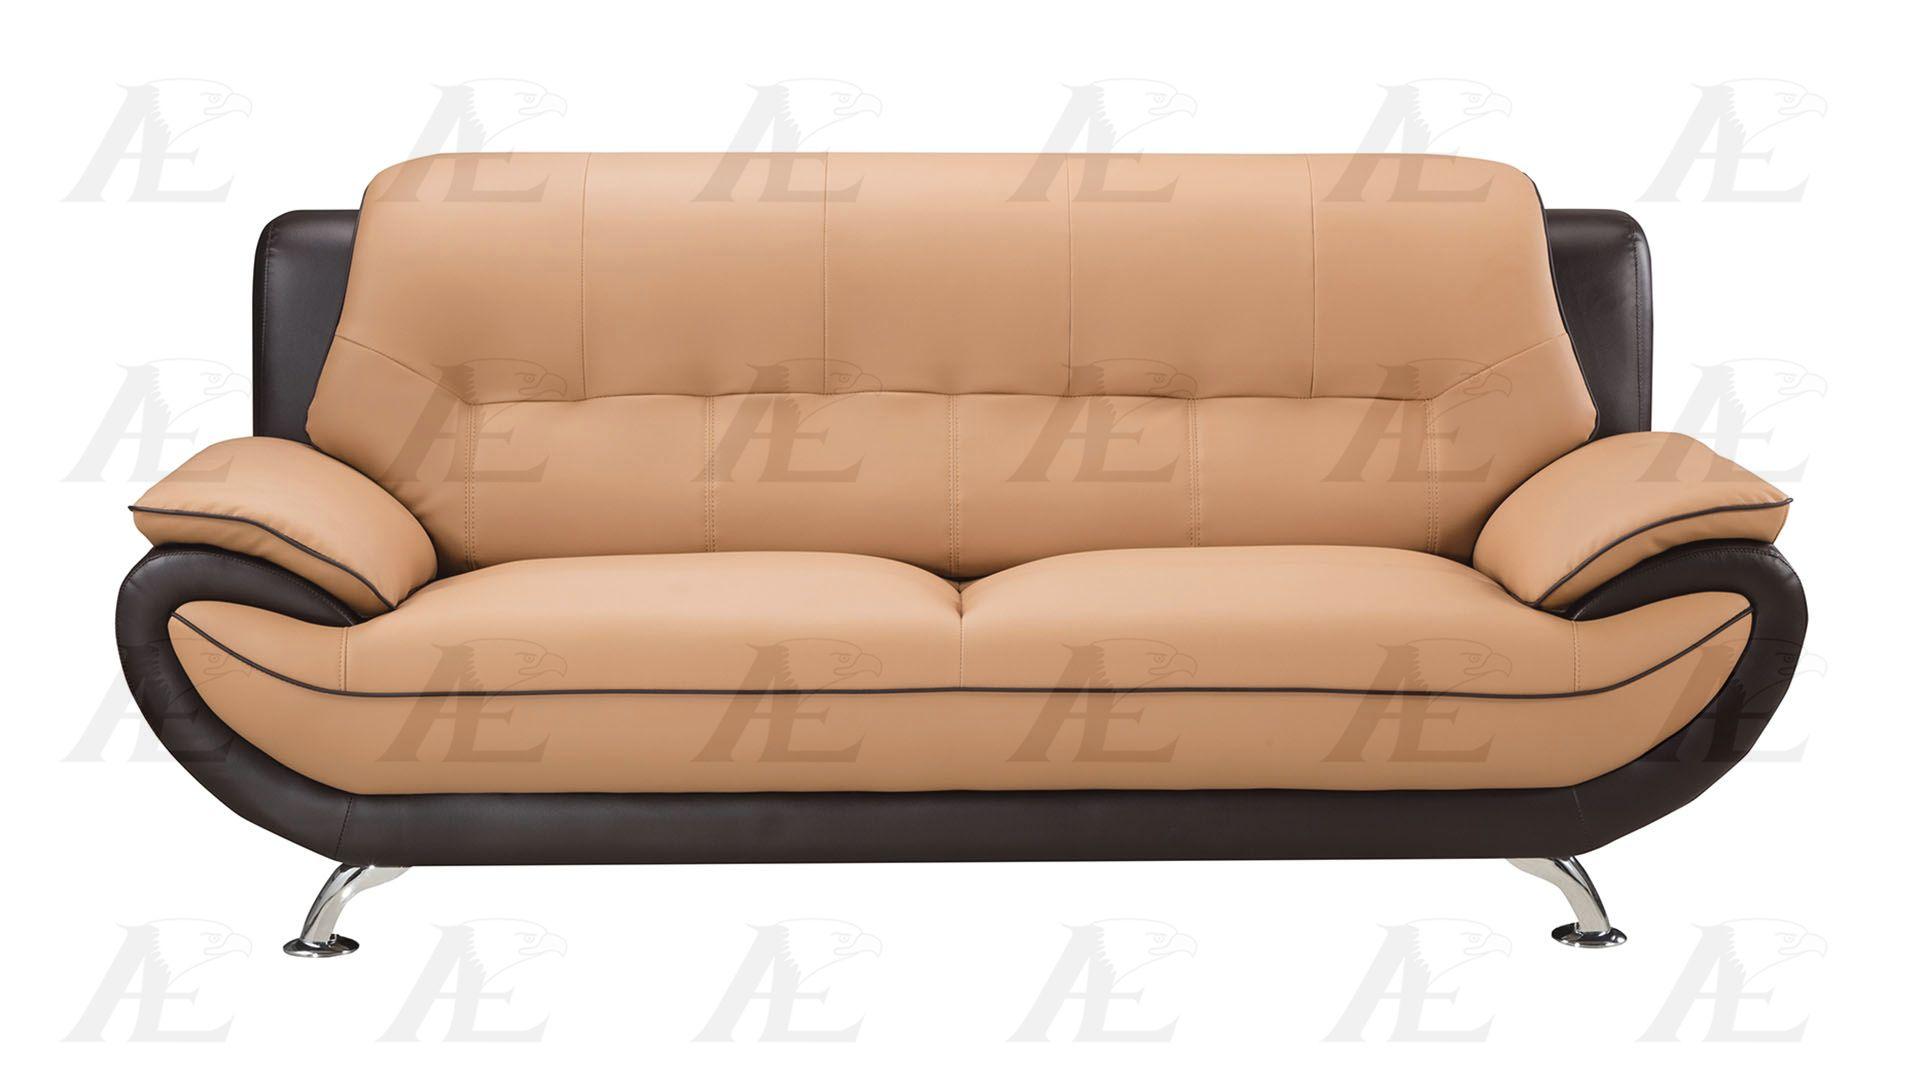 

    
American Eagle Furniture AE208-YO.BR Sofa Loveseat and Chair Set Brown/Yellow AE208-YO.BR 3Pcs
